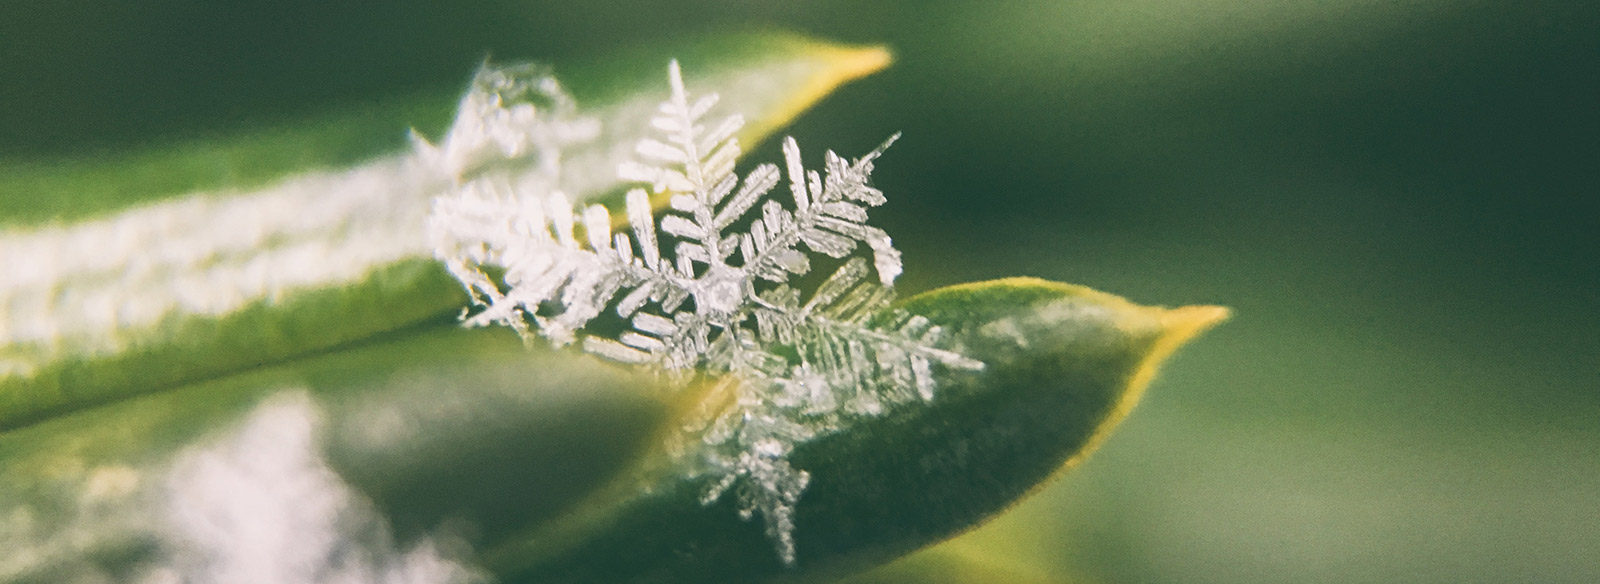 snowflake on a green leaf